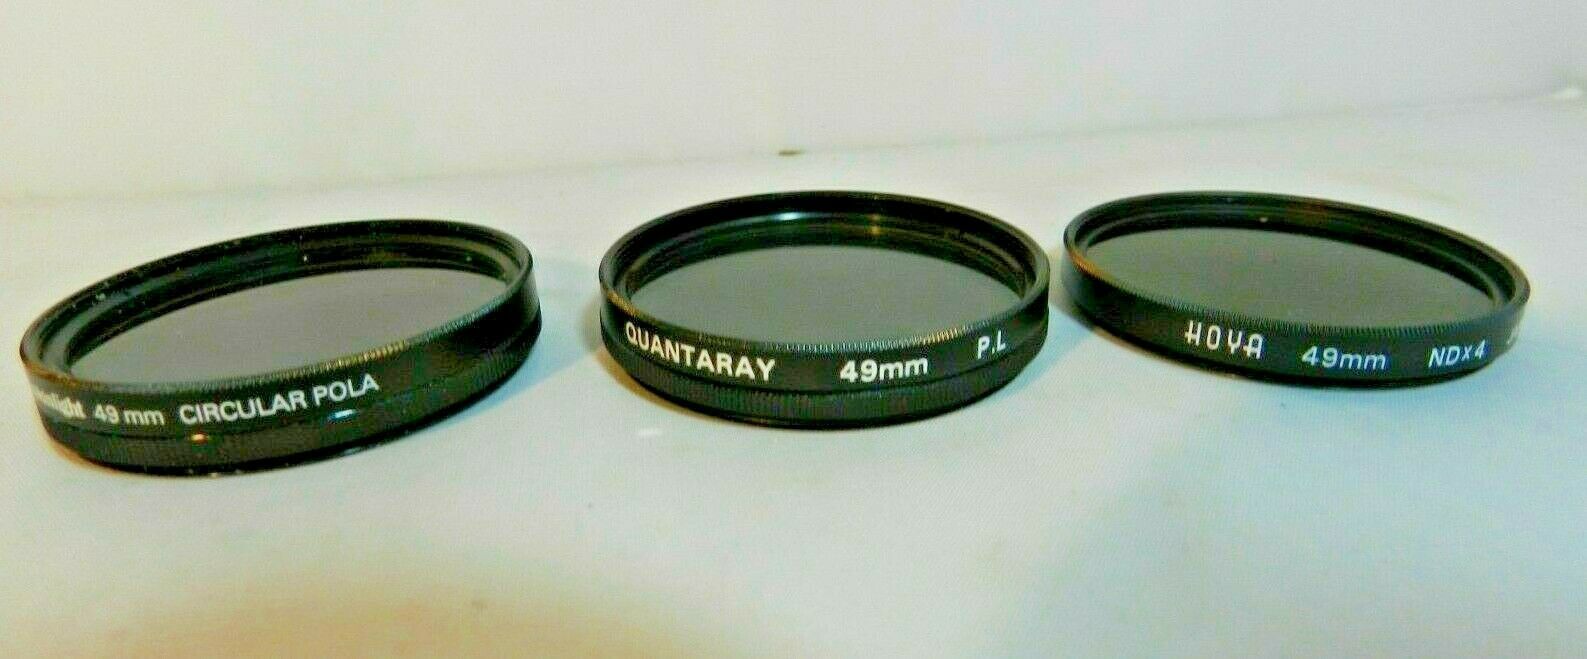 49mm Camera Lens Filters Quantaray Cokinlight Hoya Circular Lot of 3 - $27.99